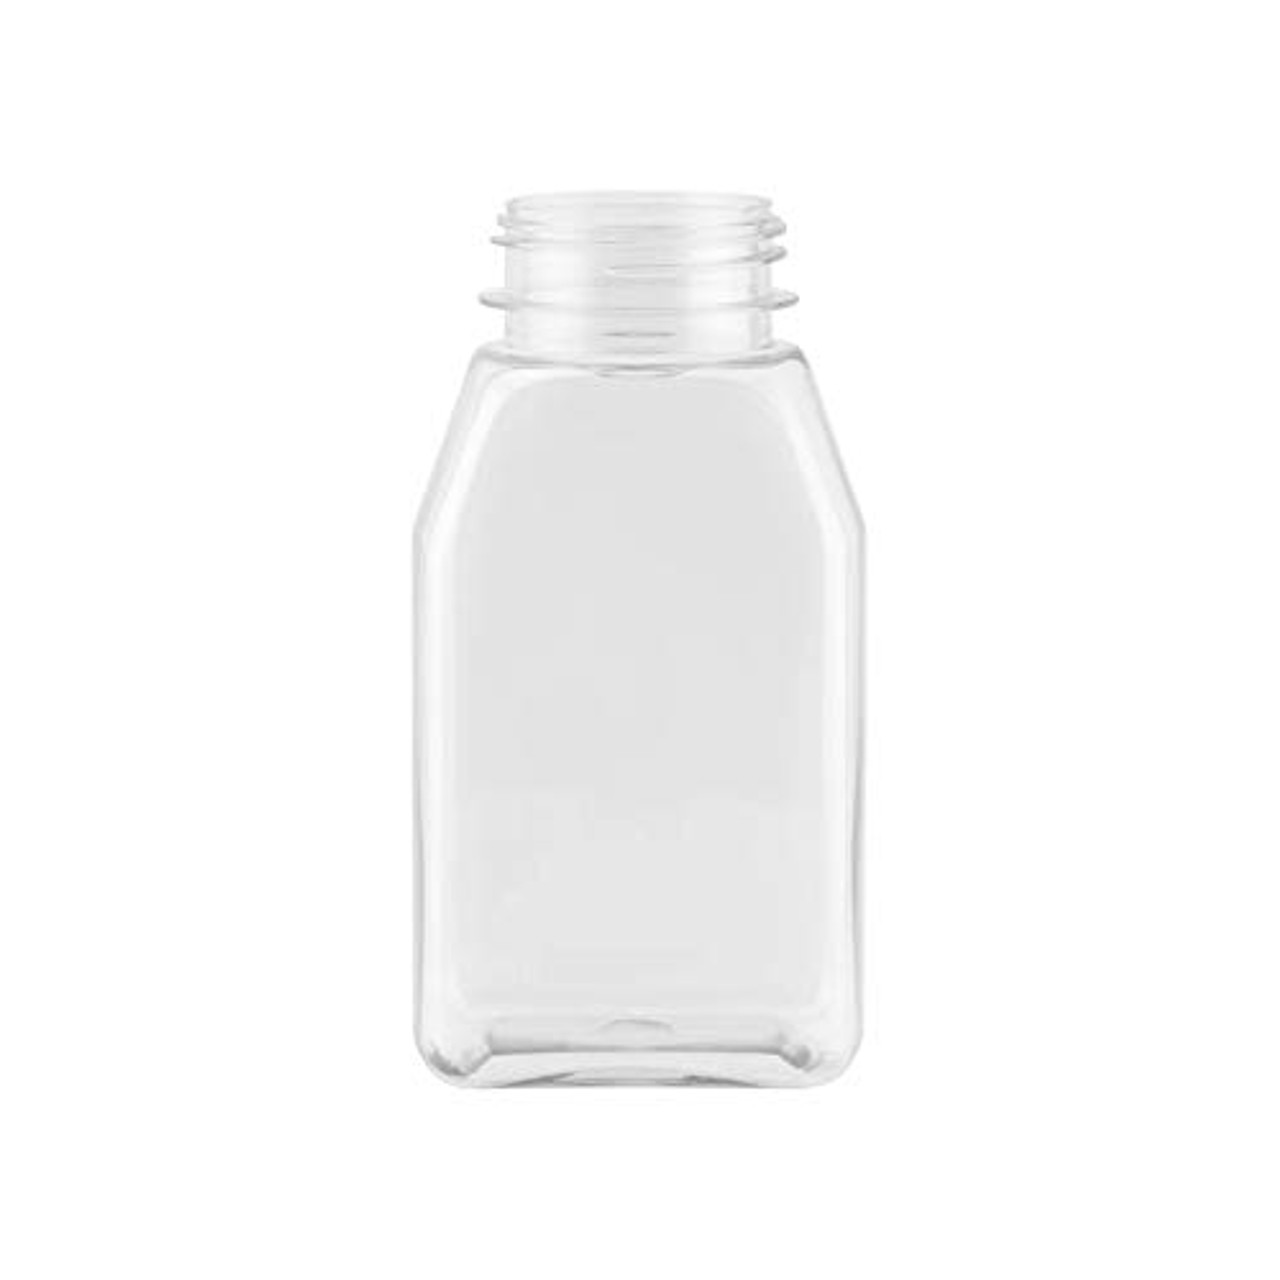 Plastic Spice Jars with Shaker Lids (16 oz, 4-Pack) Reusable Jars